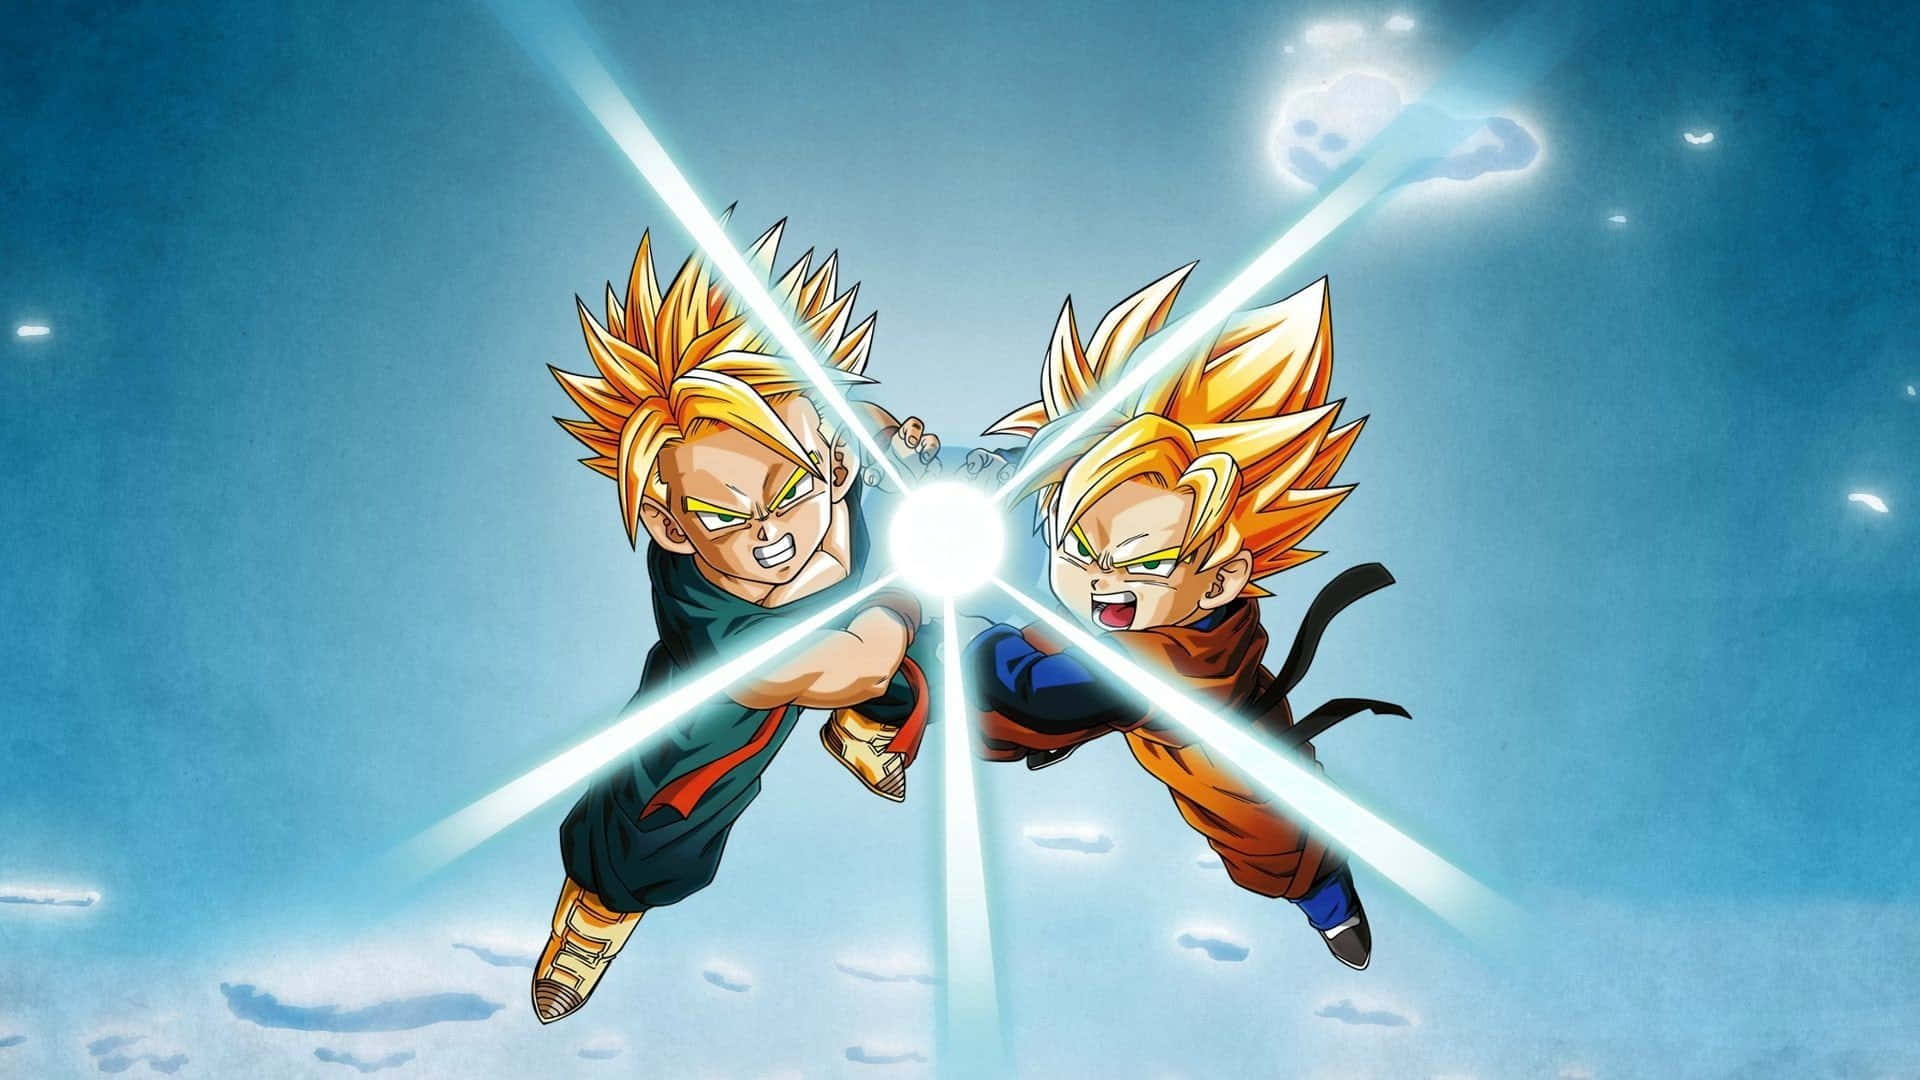 Goku and Vegeta Intense Battle in Dragon Ball Z